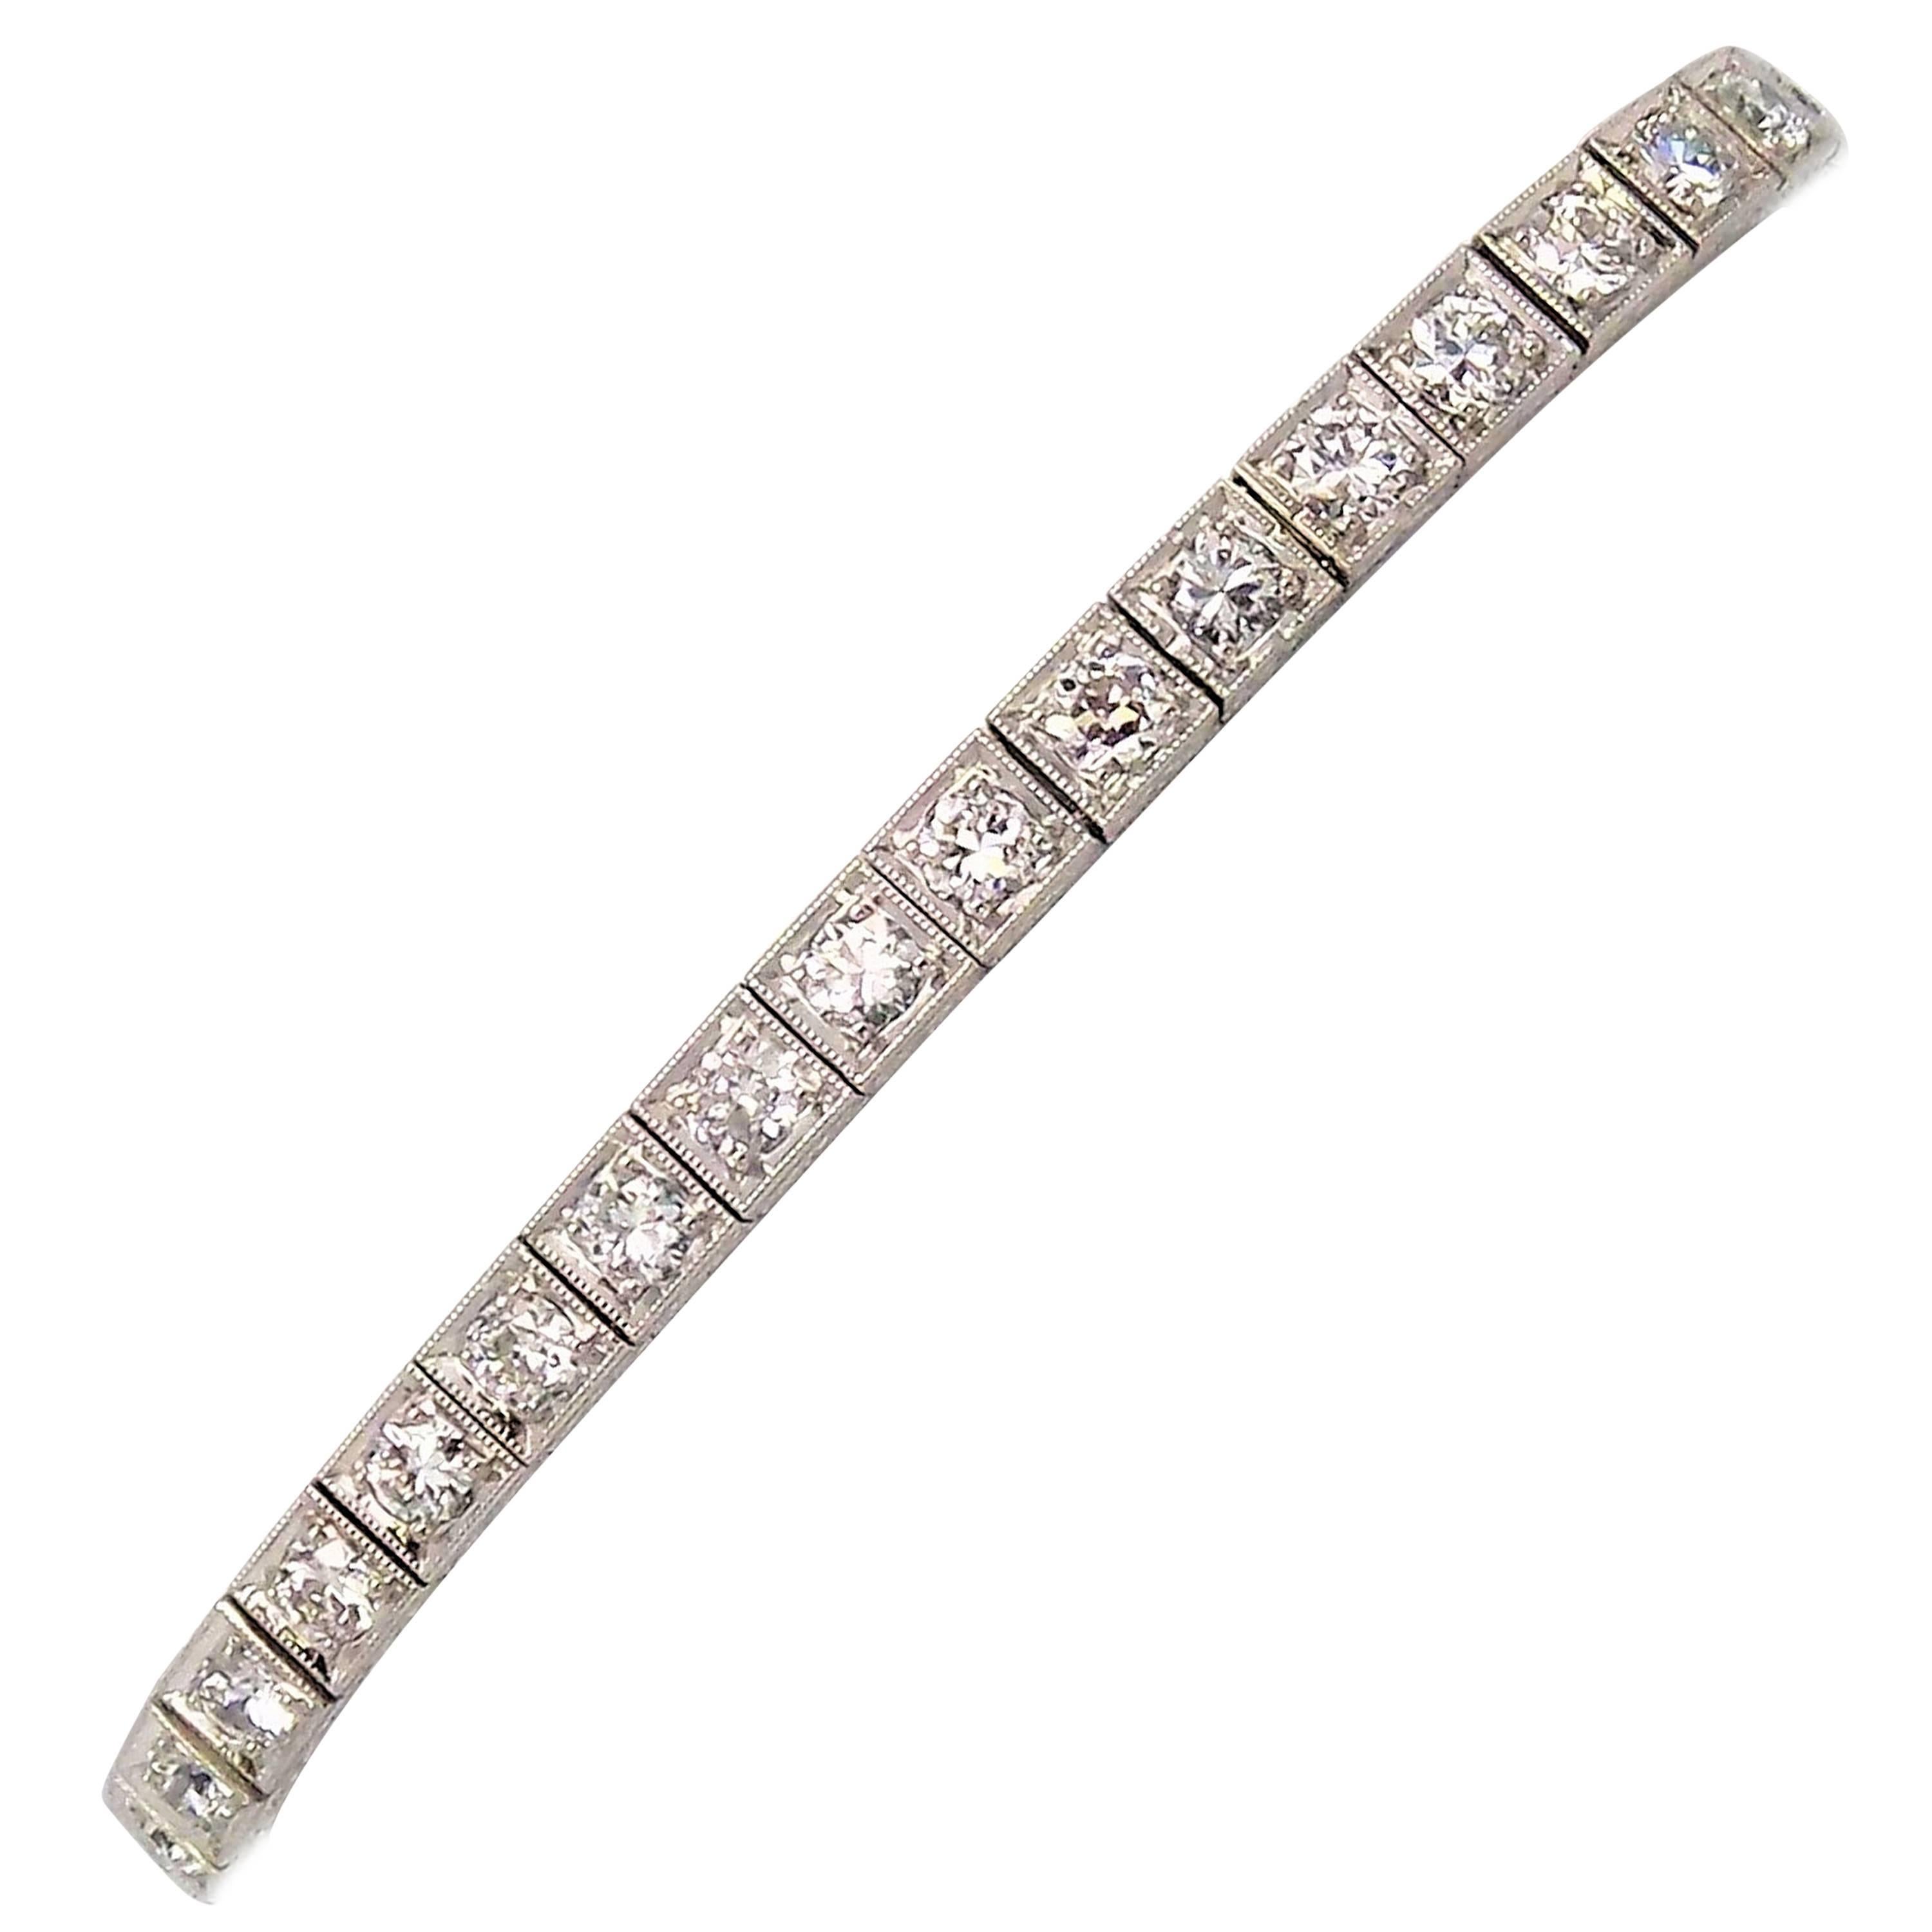 Antique Platinum Line Diamond Bracelet by Marcus and Co.